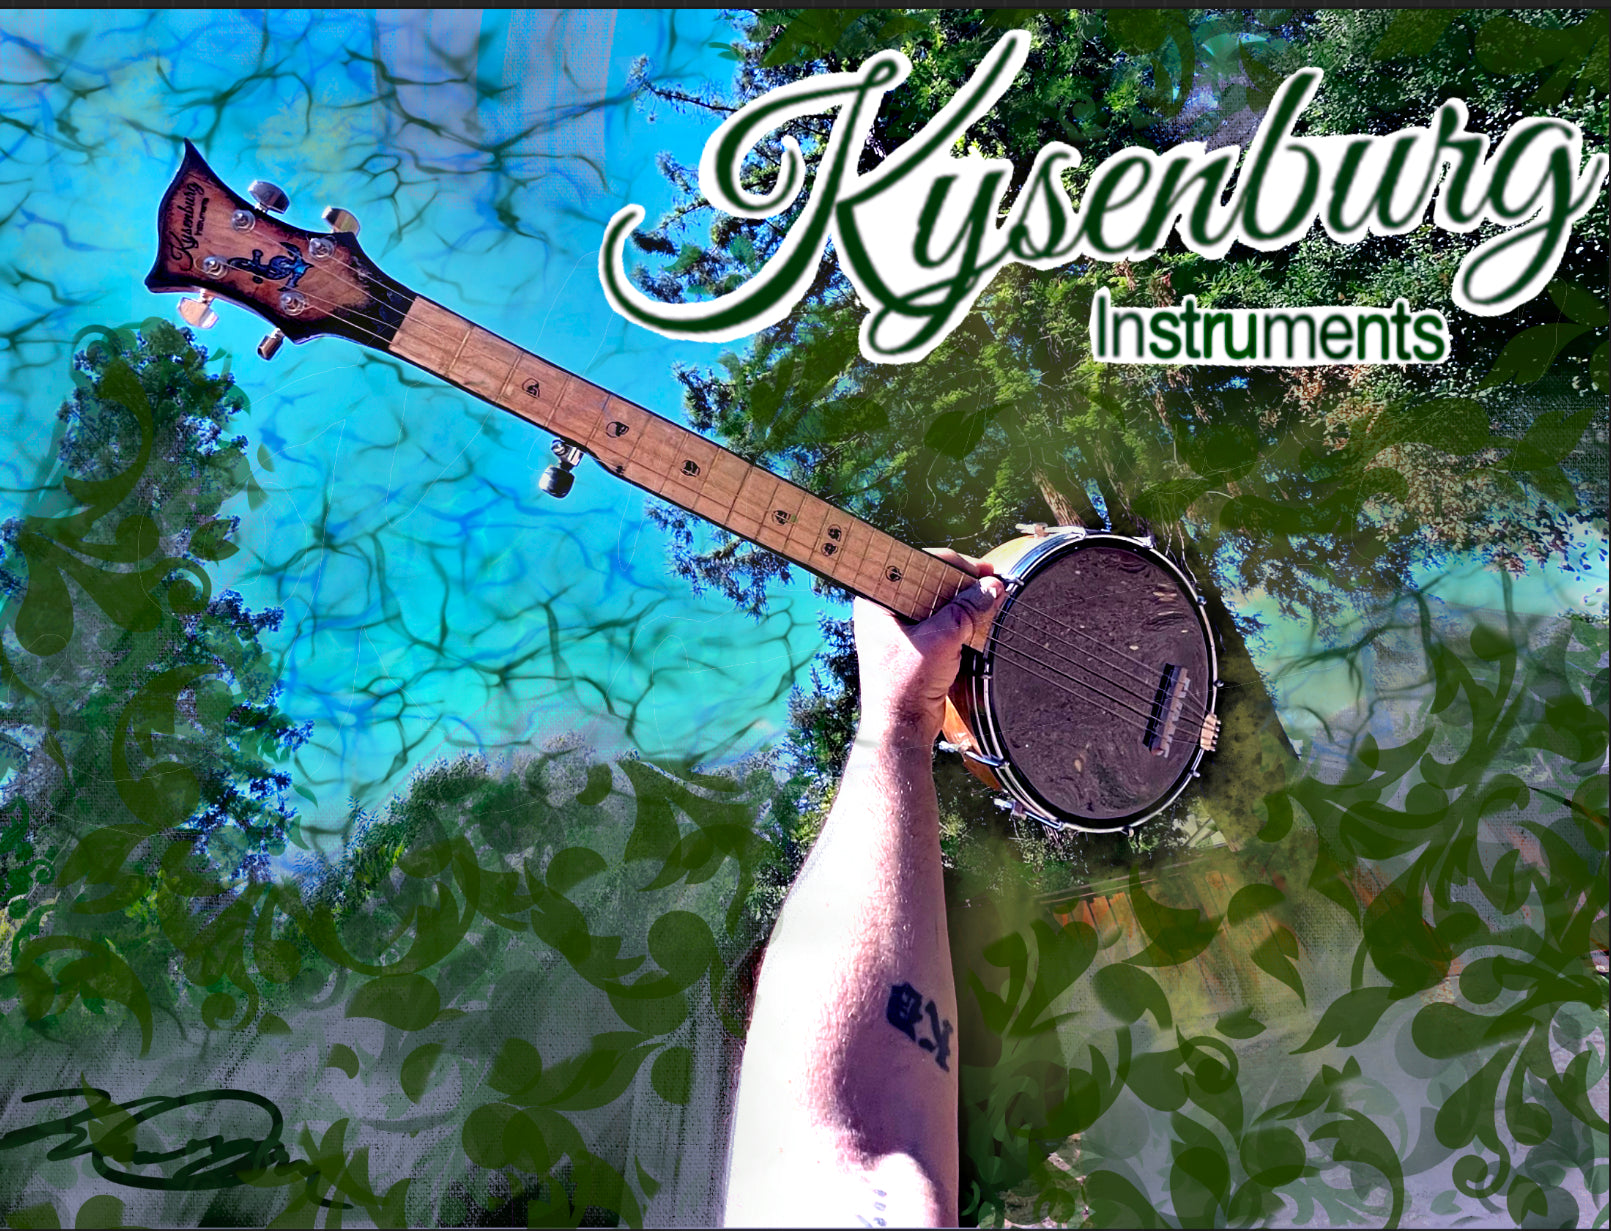 Load video: 5 years of kysenburg